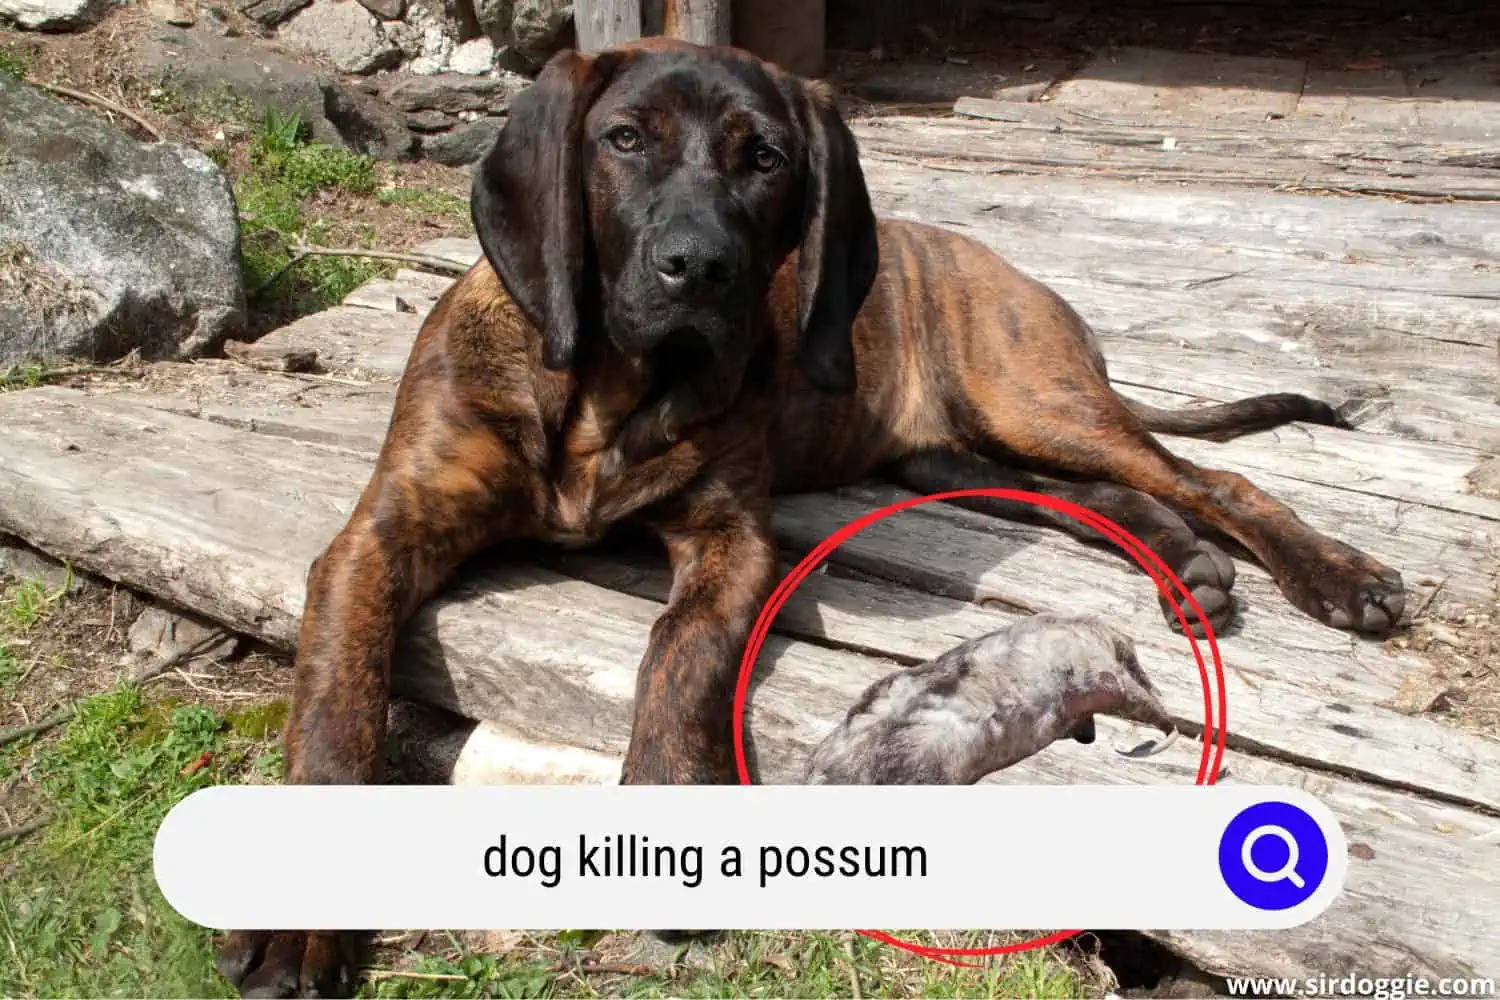 dog killed a possum in hunting